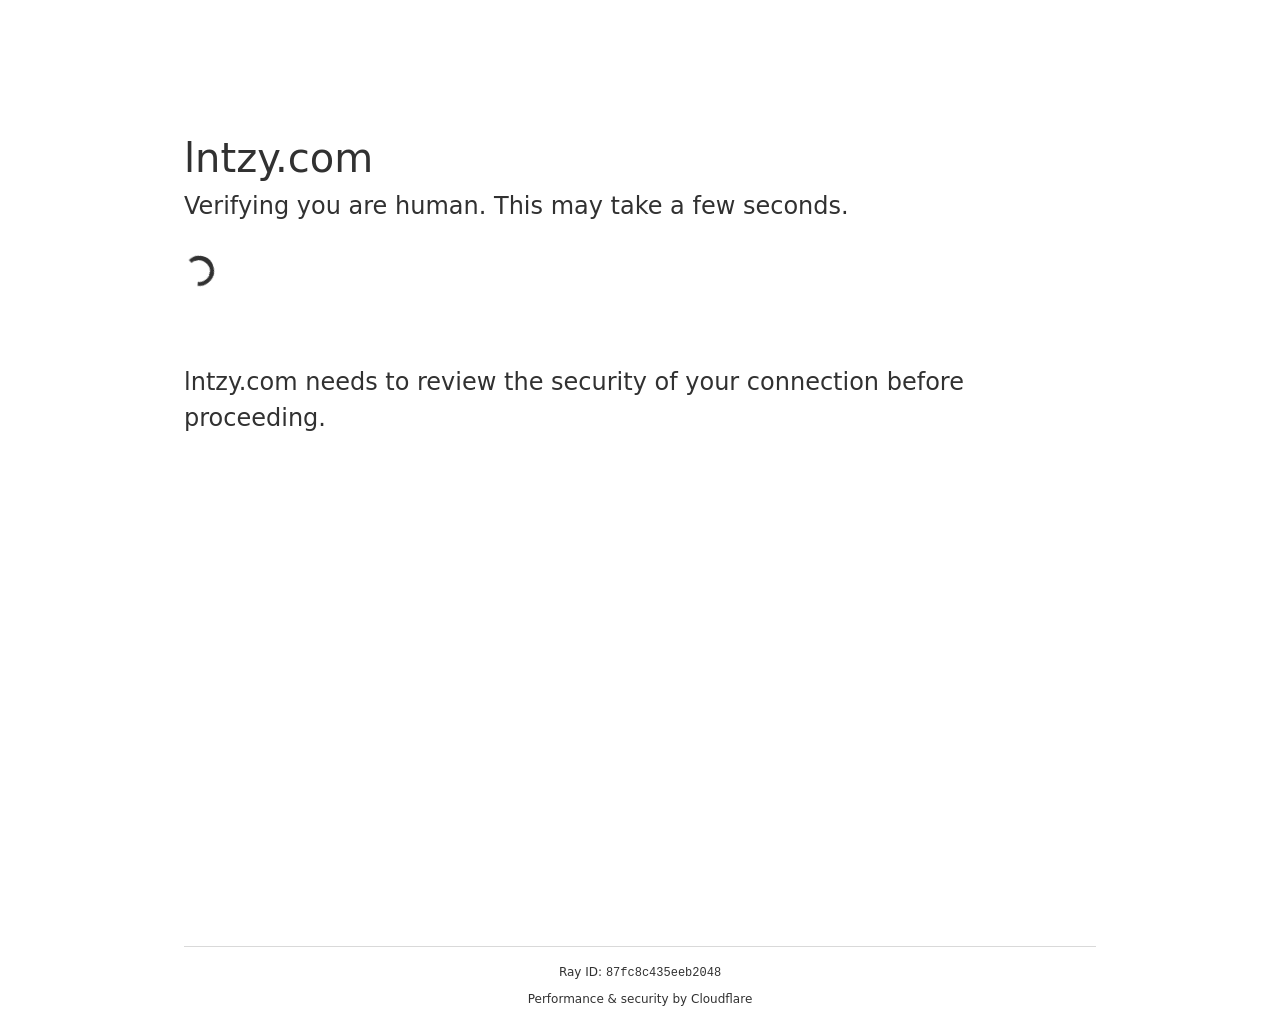 lntzy.com